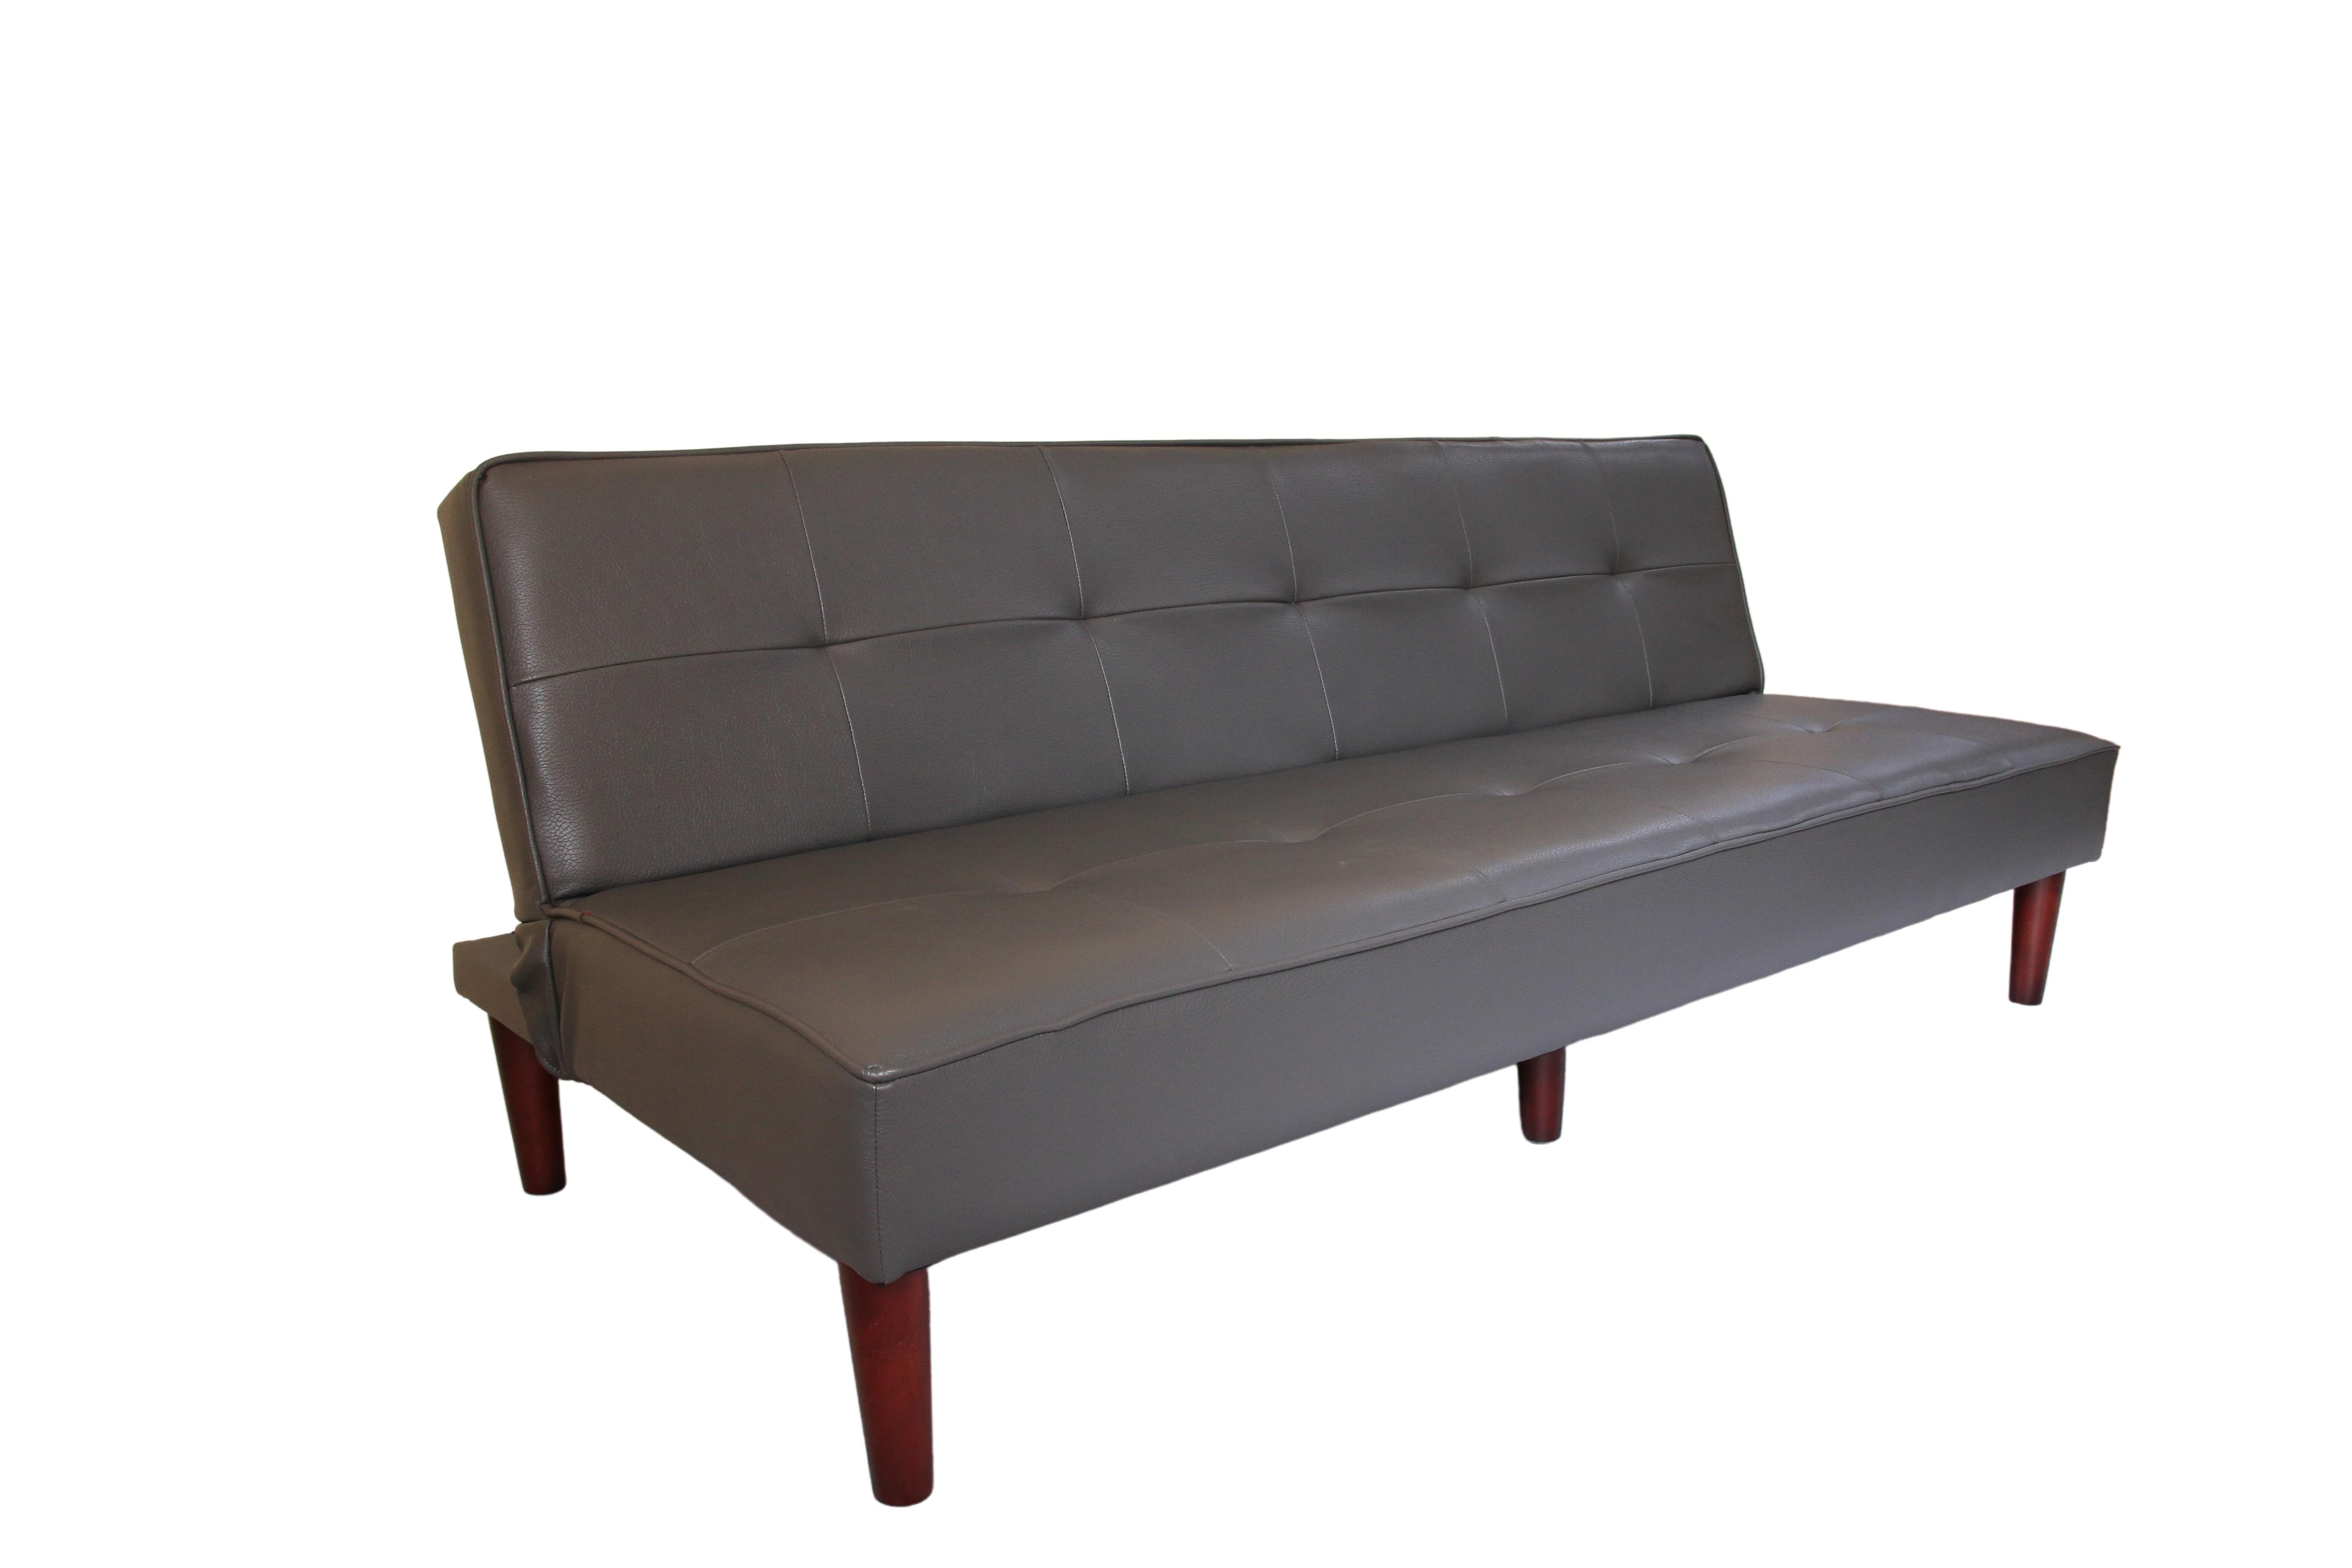 Sofa bed 3 trong 1 đa năng Juno sofa màu đen, xám, kem